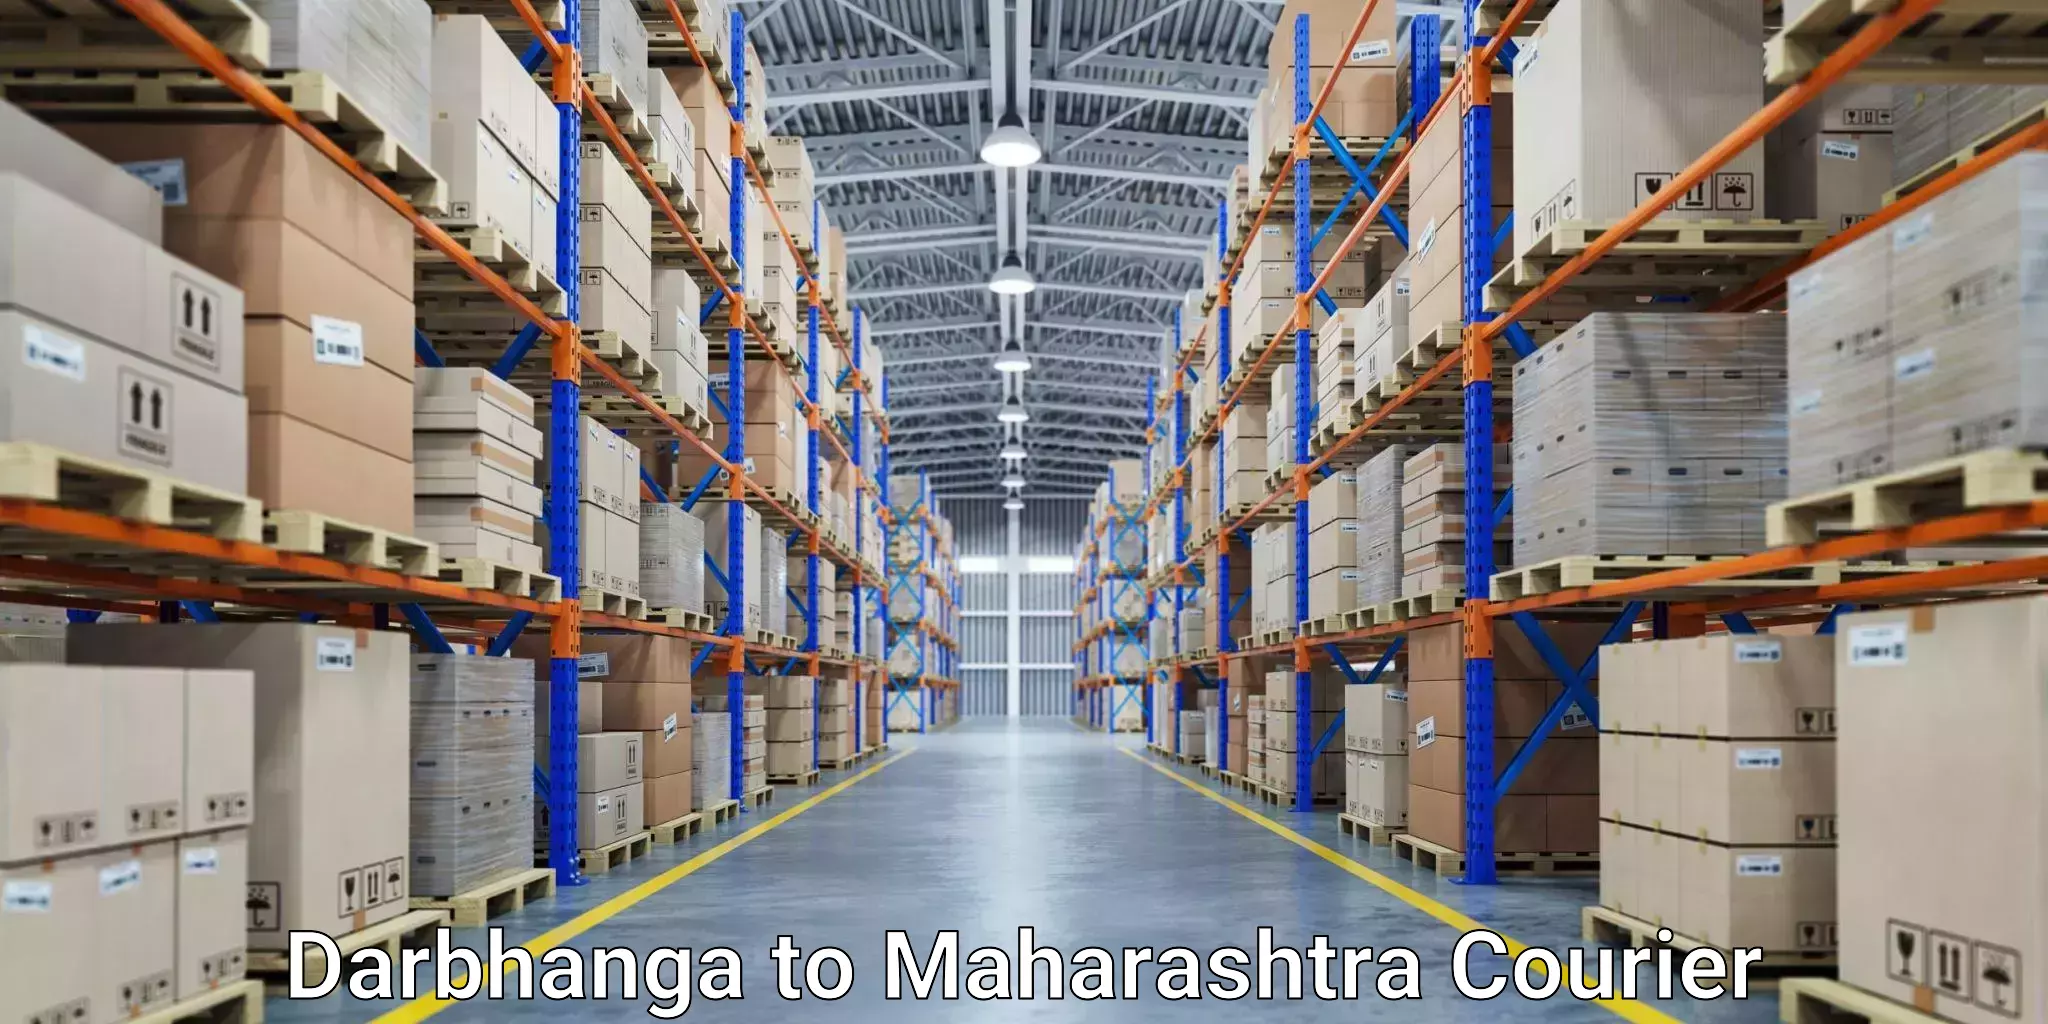 24/7 courier service Darbhanga to Aurangabad